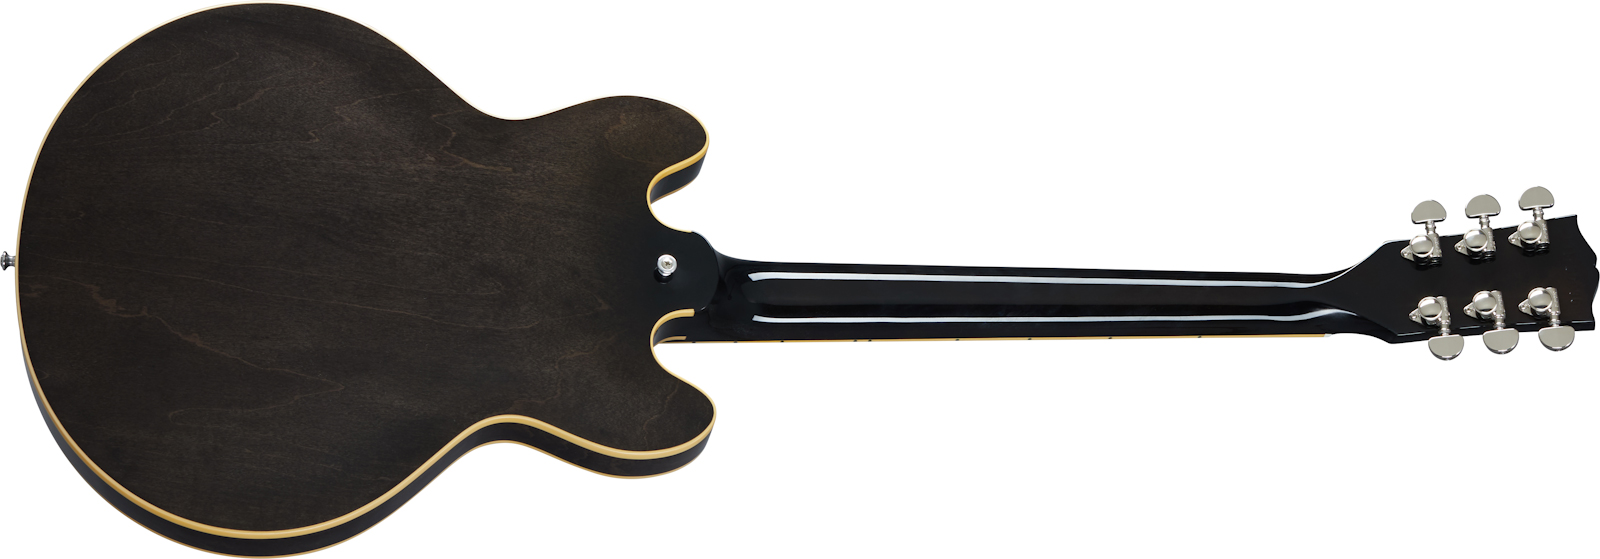 Gibson Es-339 Modern 2020 2h Ht Rw - Trans Ebony - Semi-hollow electric guitar - Variation 1